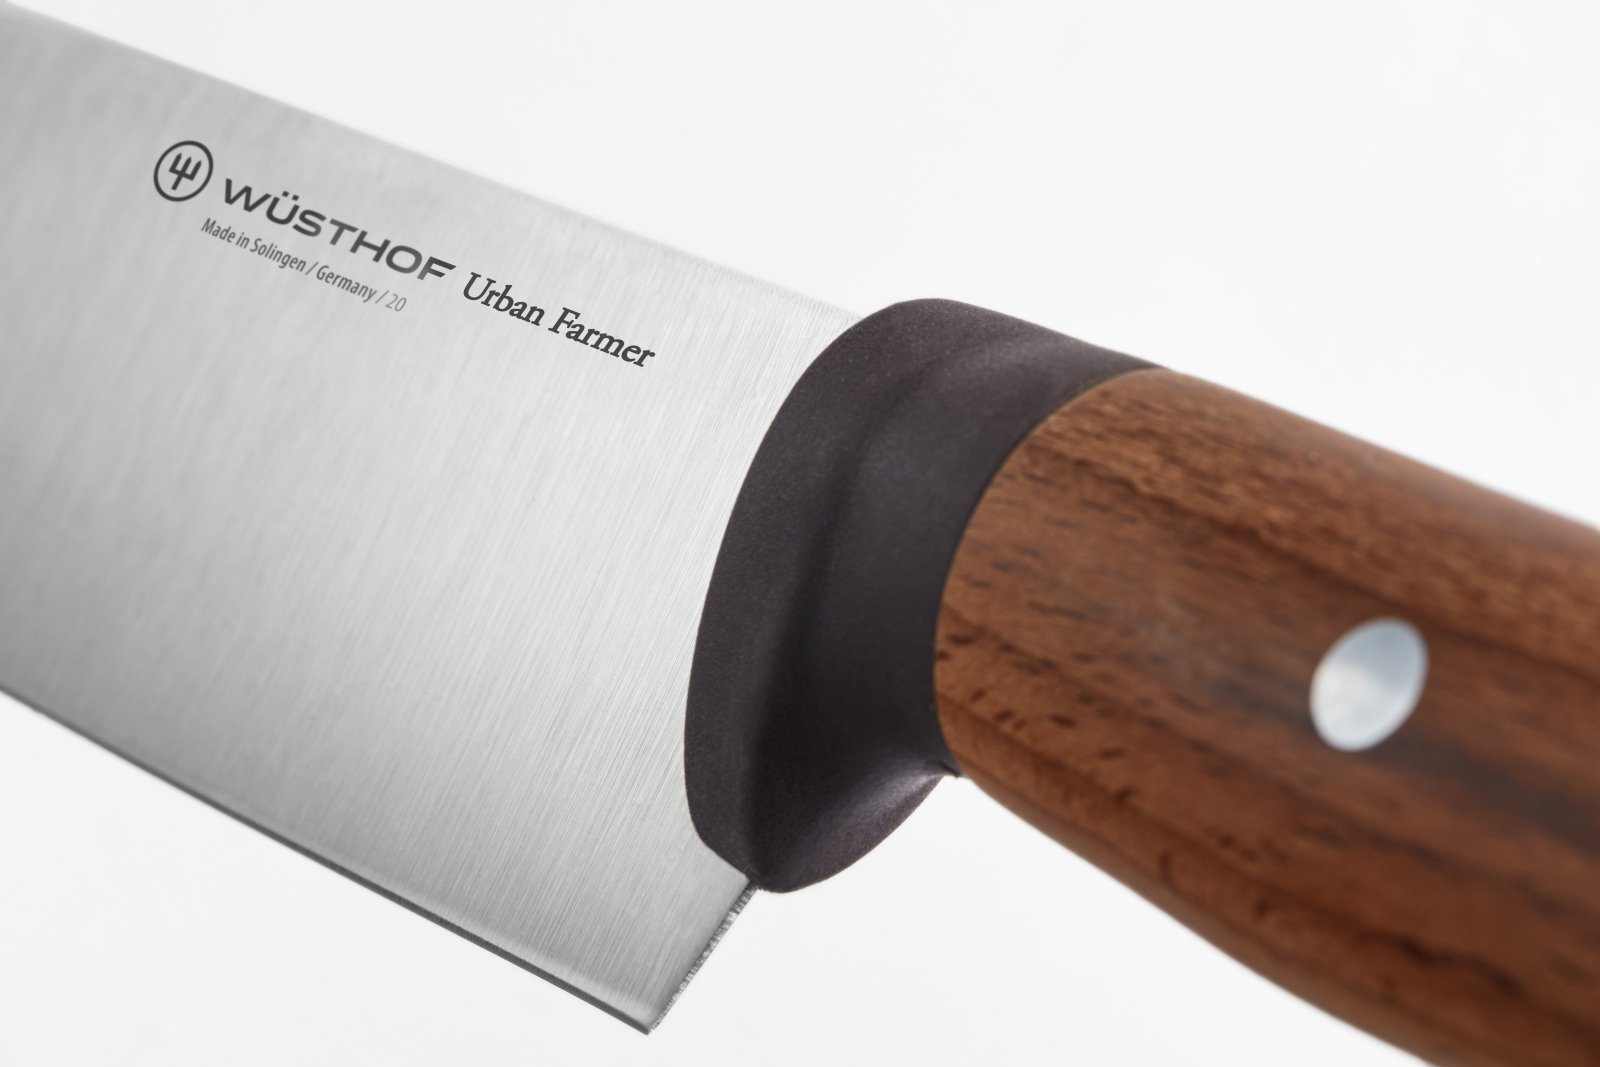 Wusthof Urban Farmer Serrated Utility Knife 14cm - 1025246314 - The Cotswold Knife Company